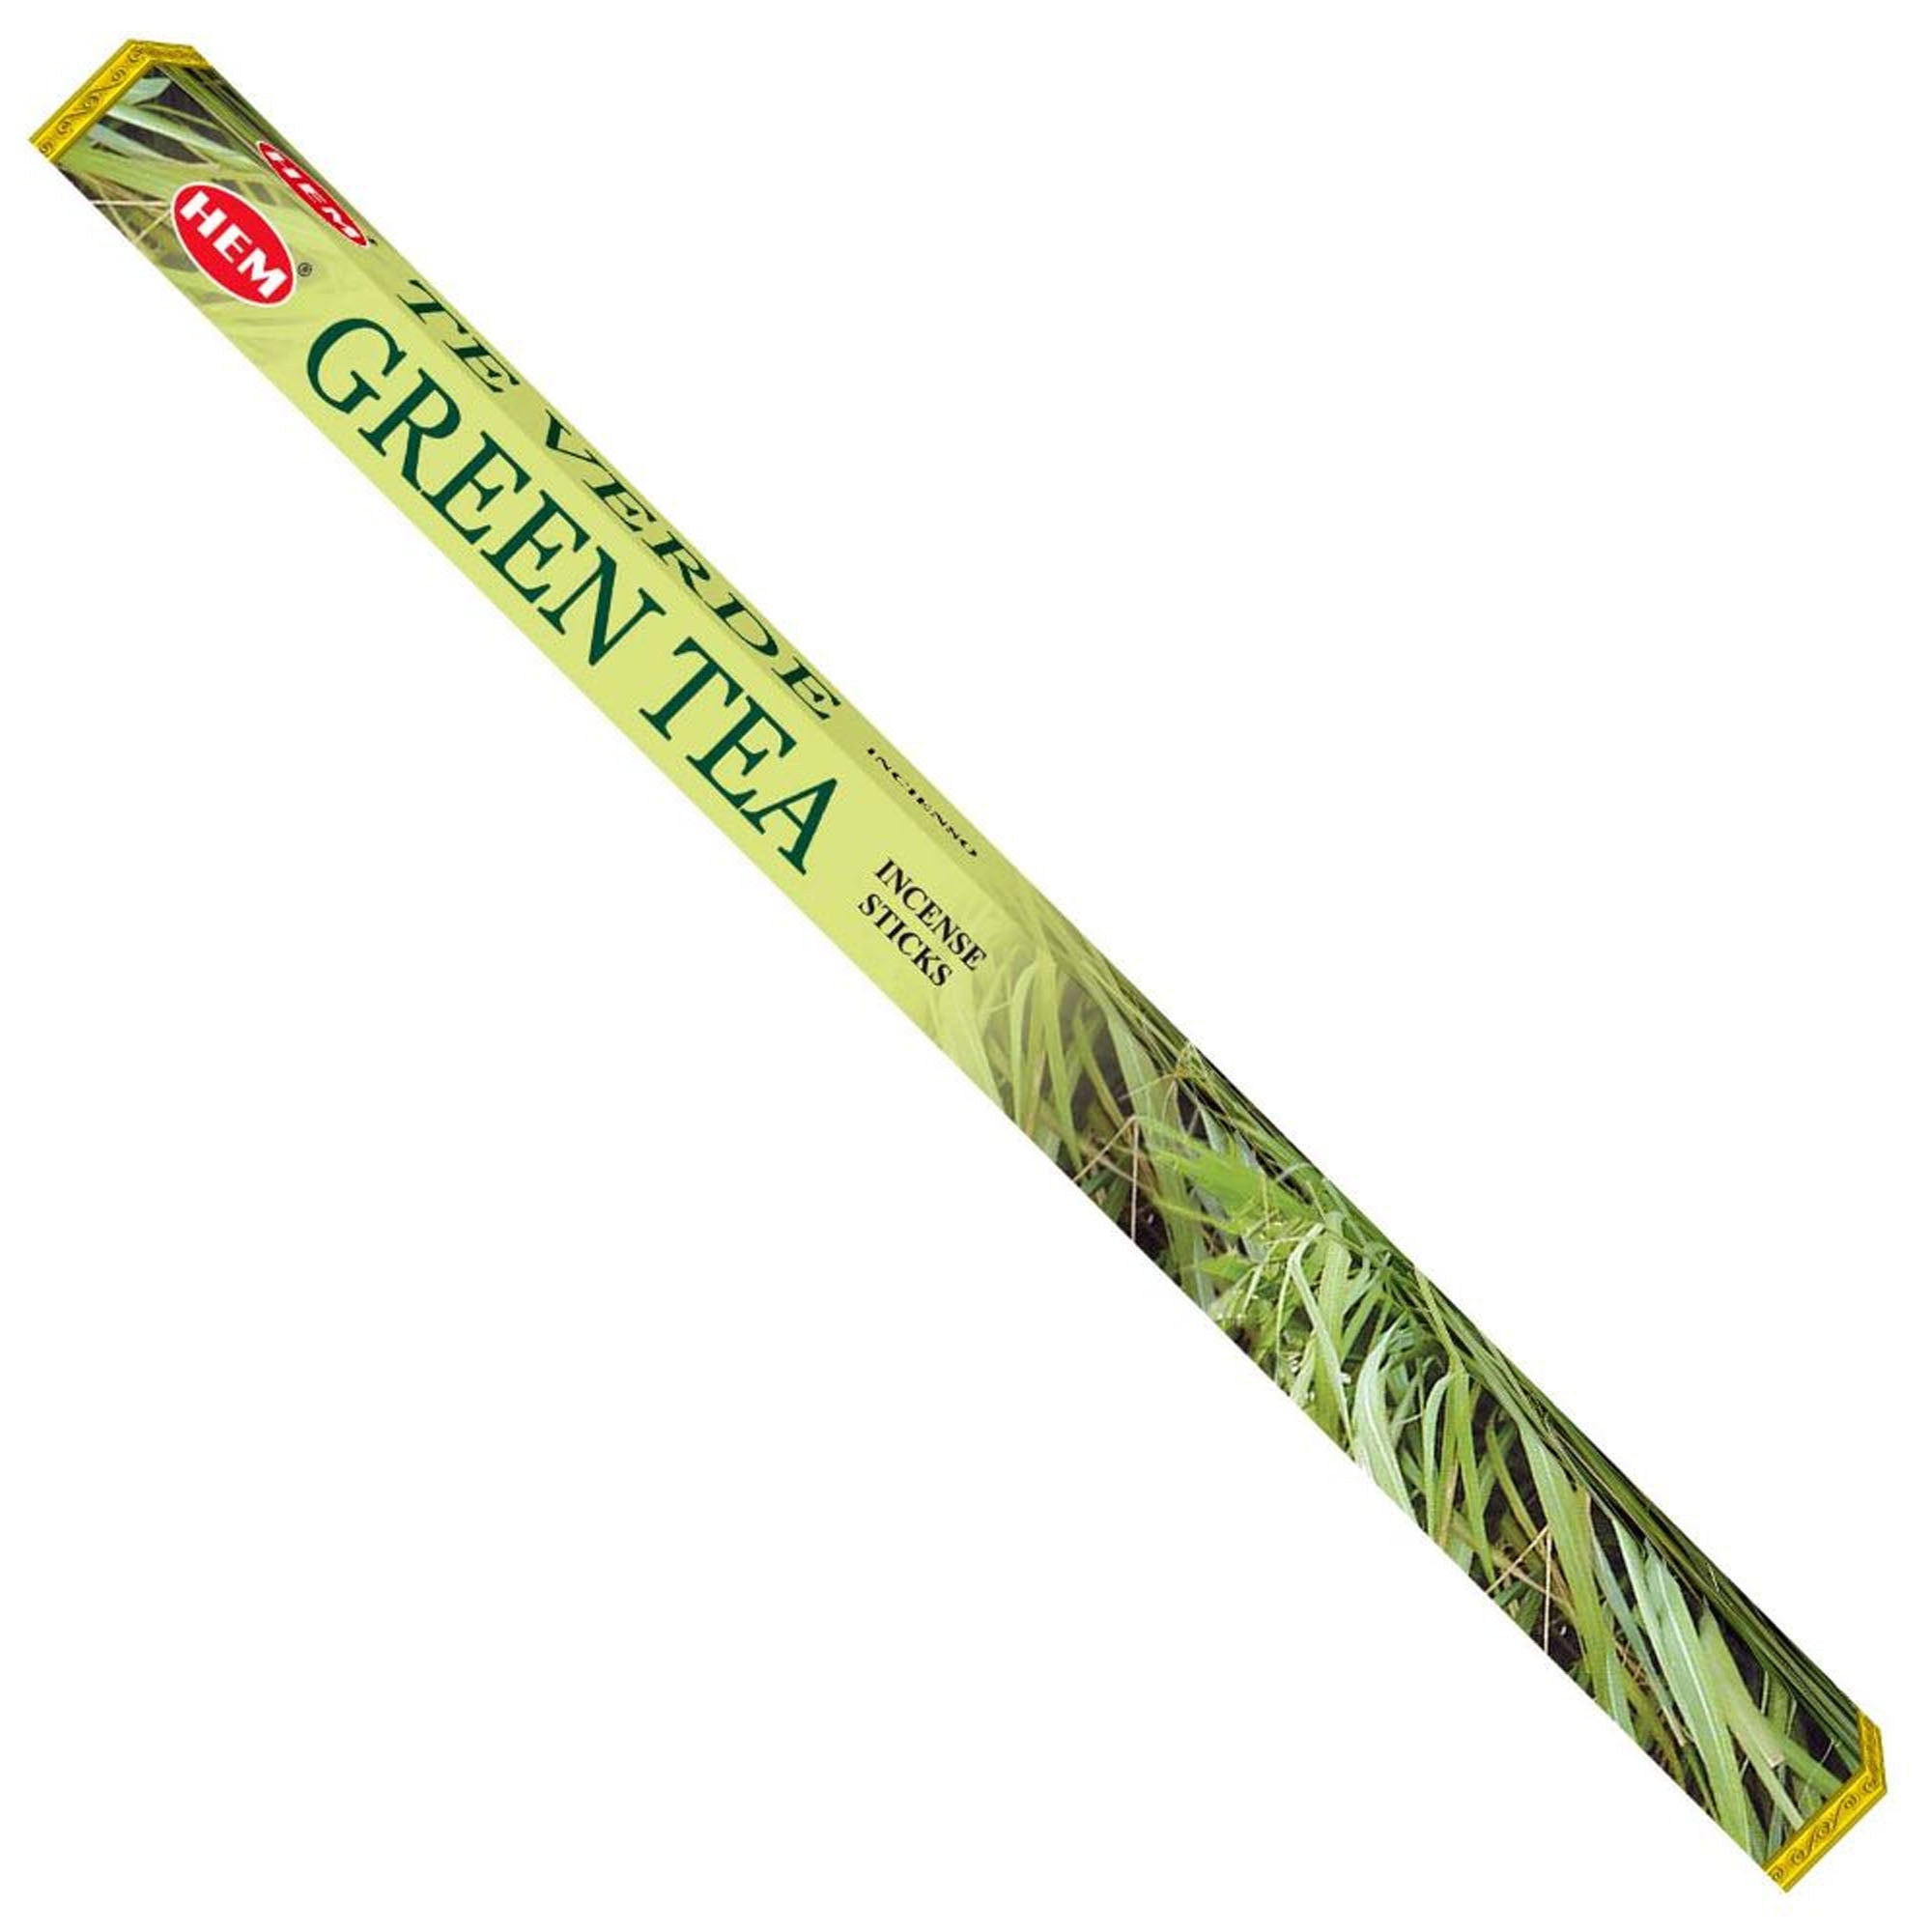 Hem - Square - Green Tea Incense Sticks